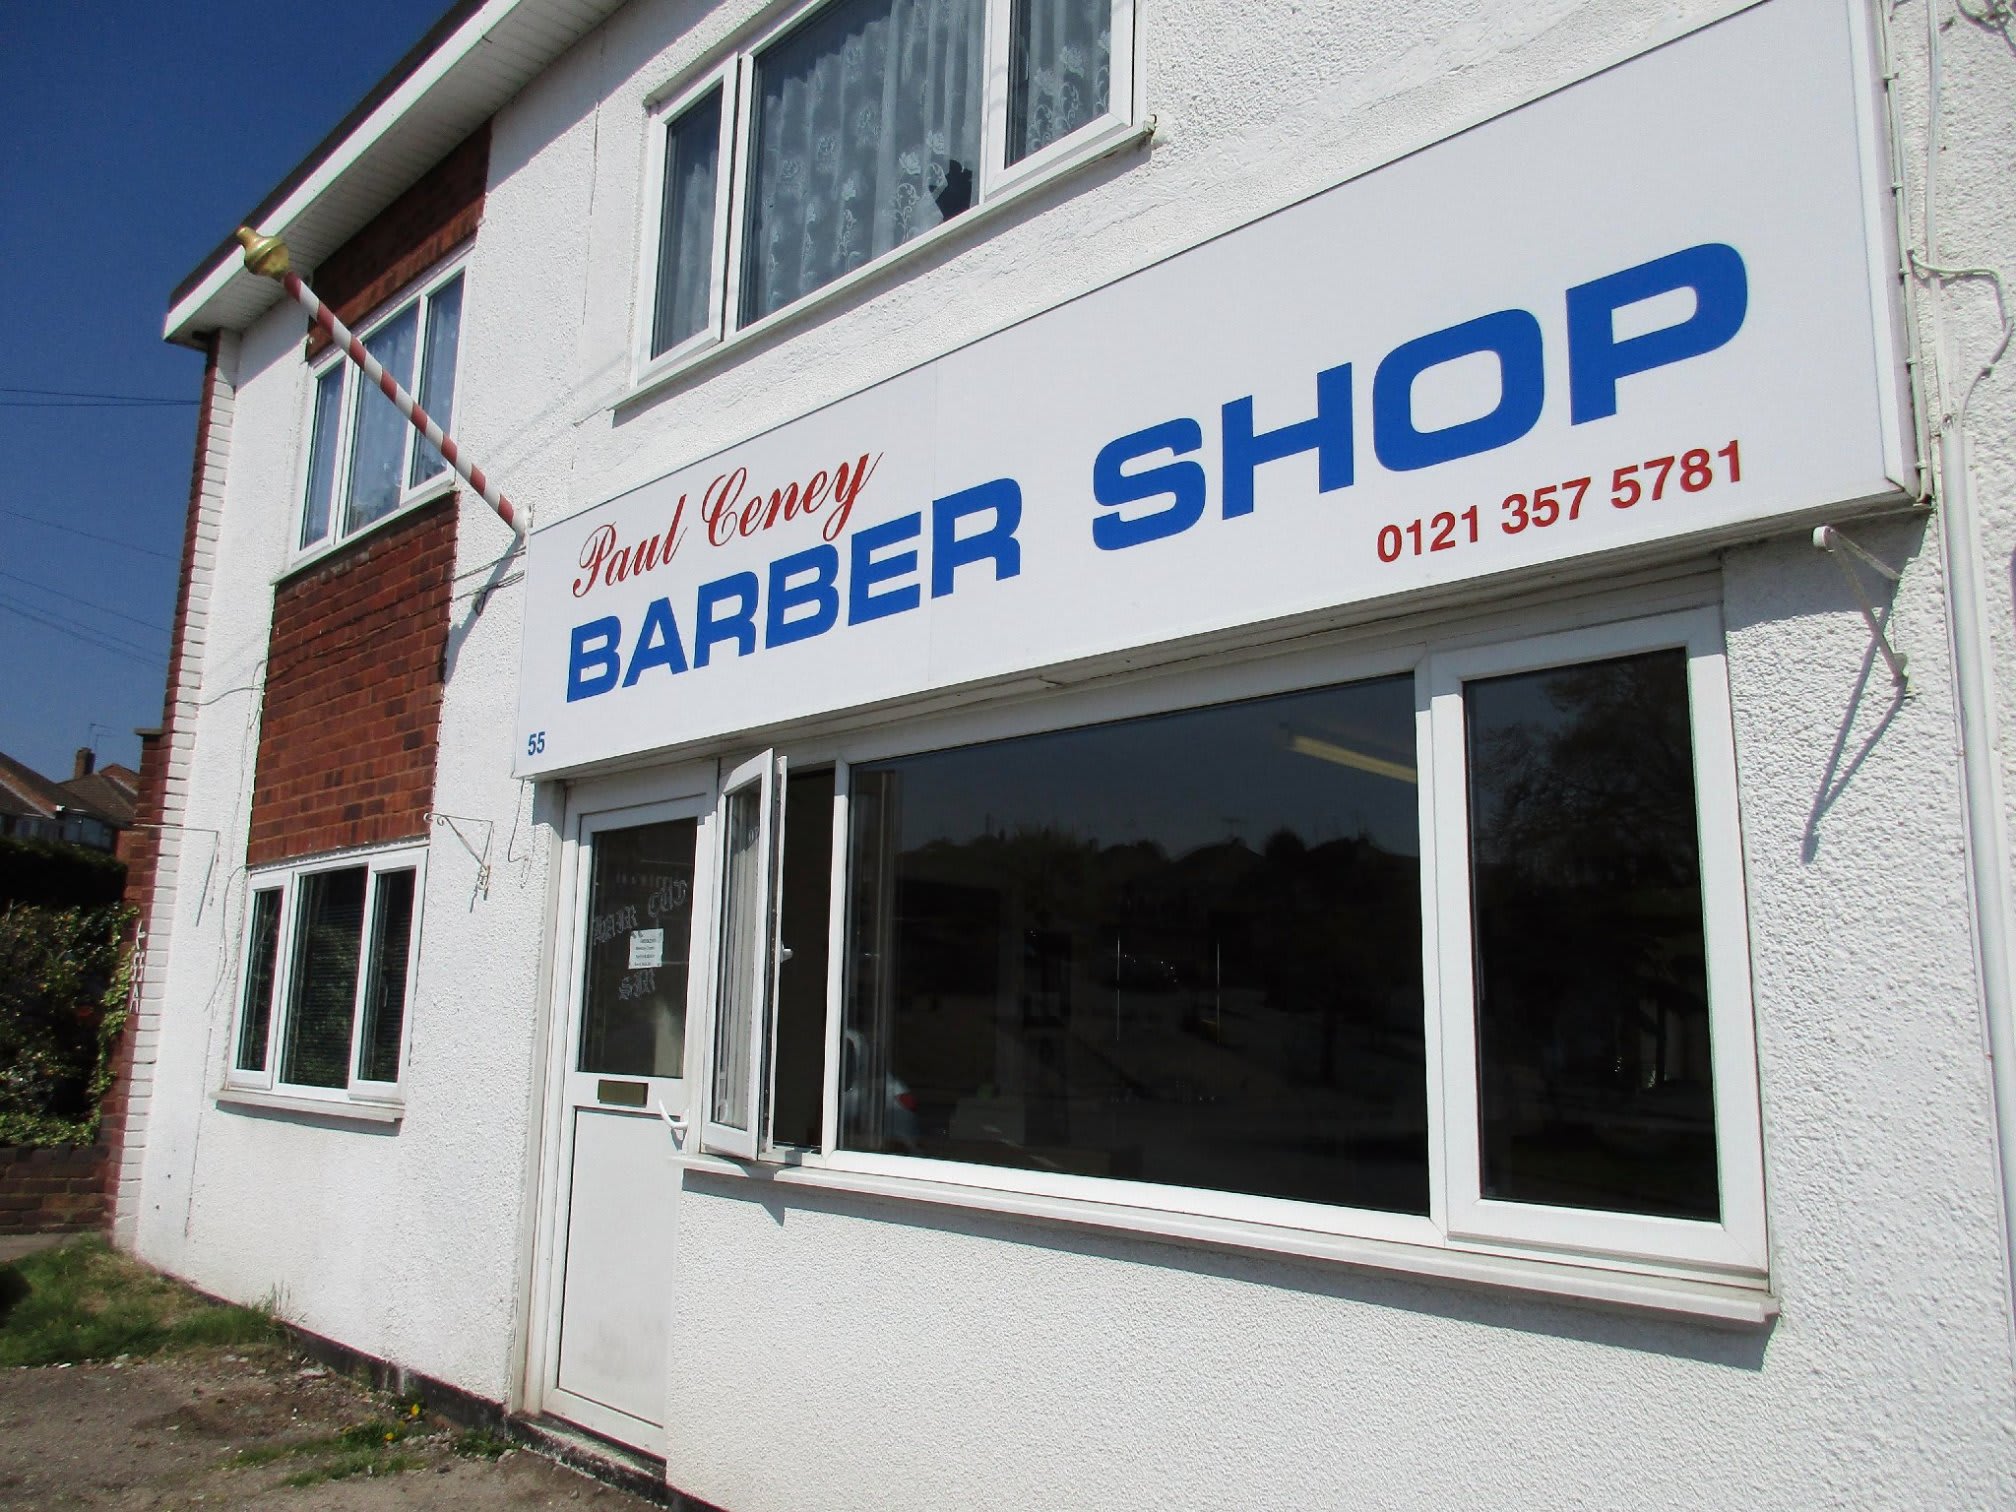 Images Paul Ceney Barber Shop